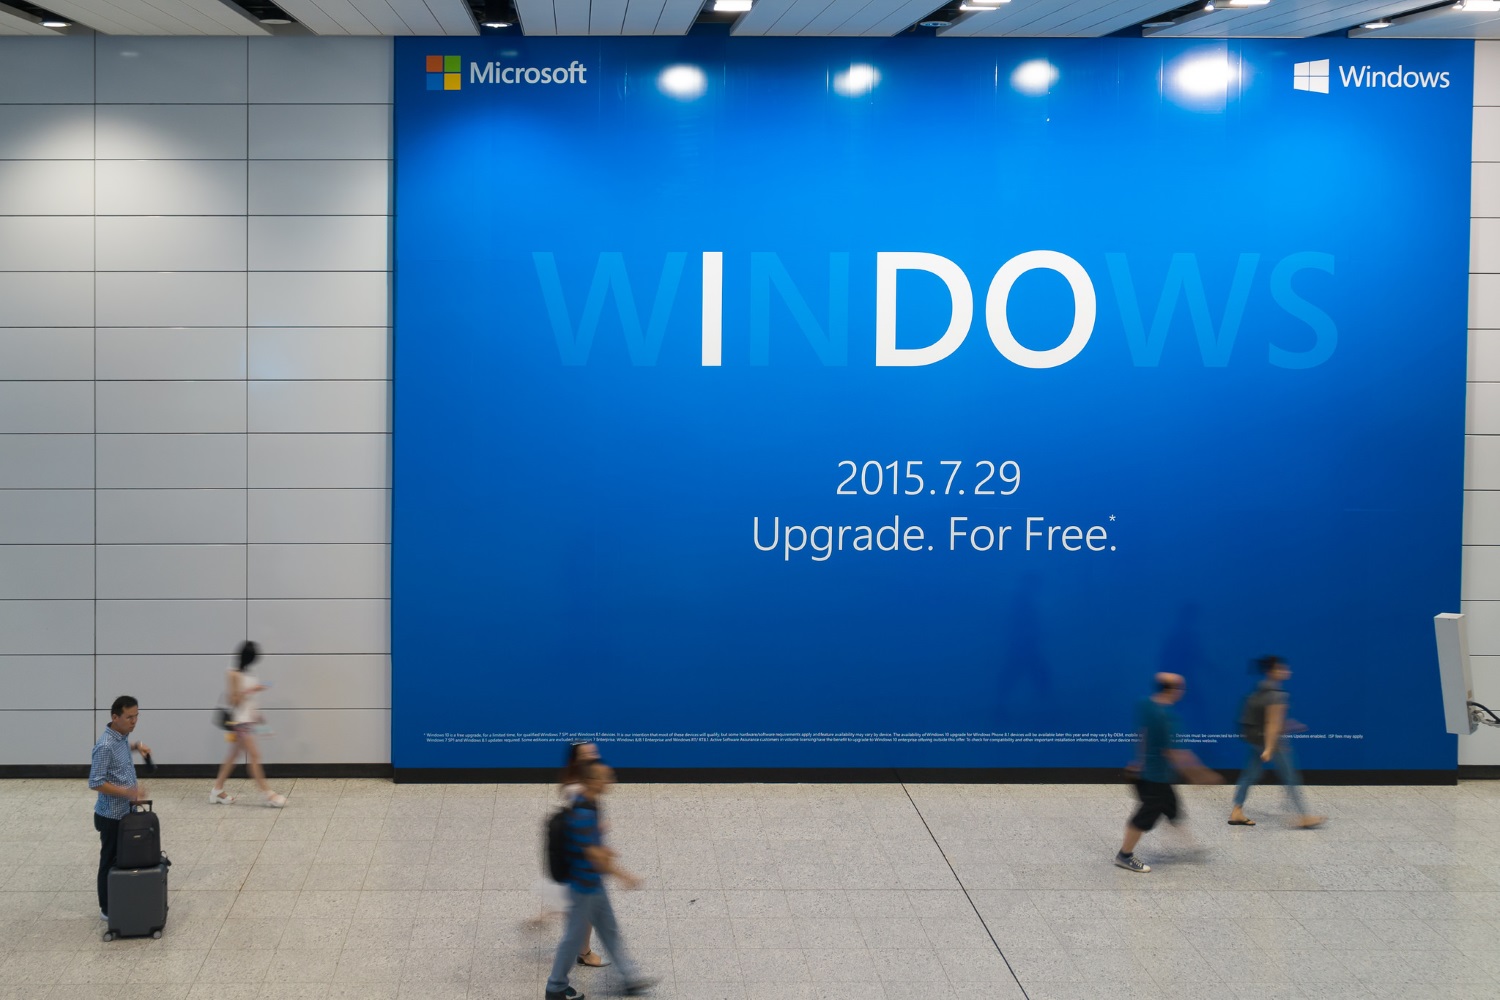 Uso do Windows 10 ultrapassa Windows 7 pela primeira vez